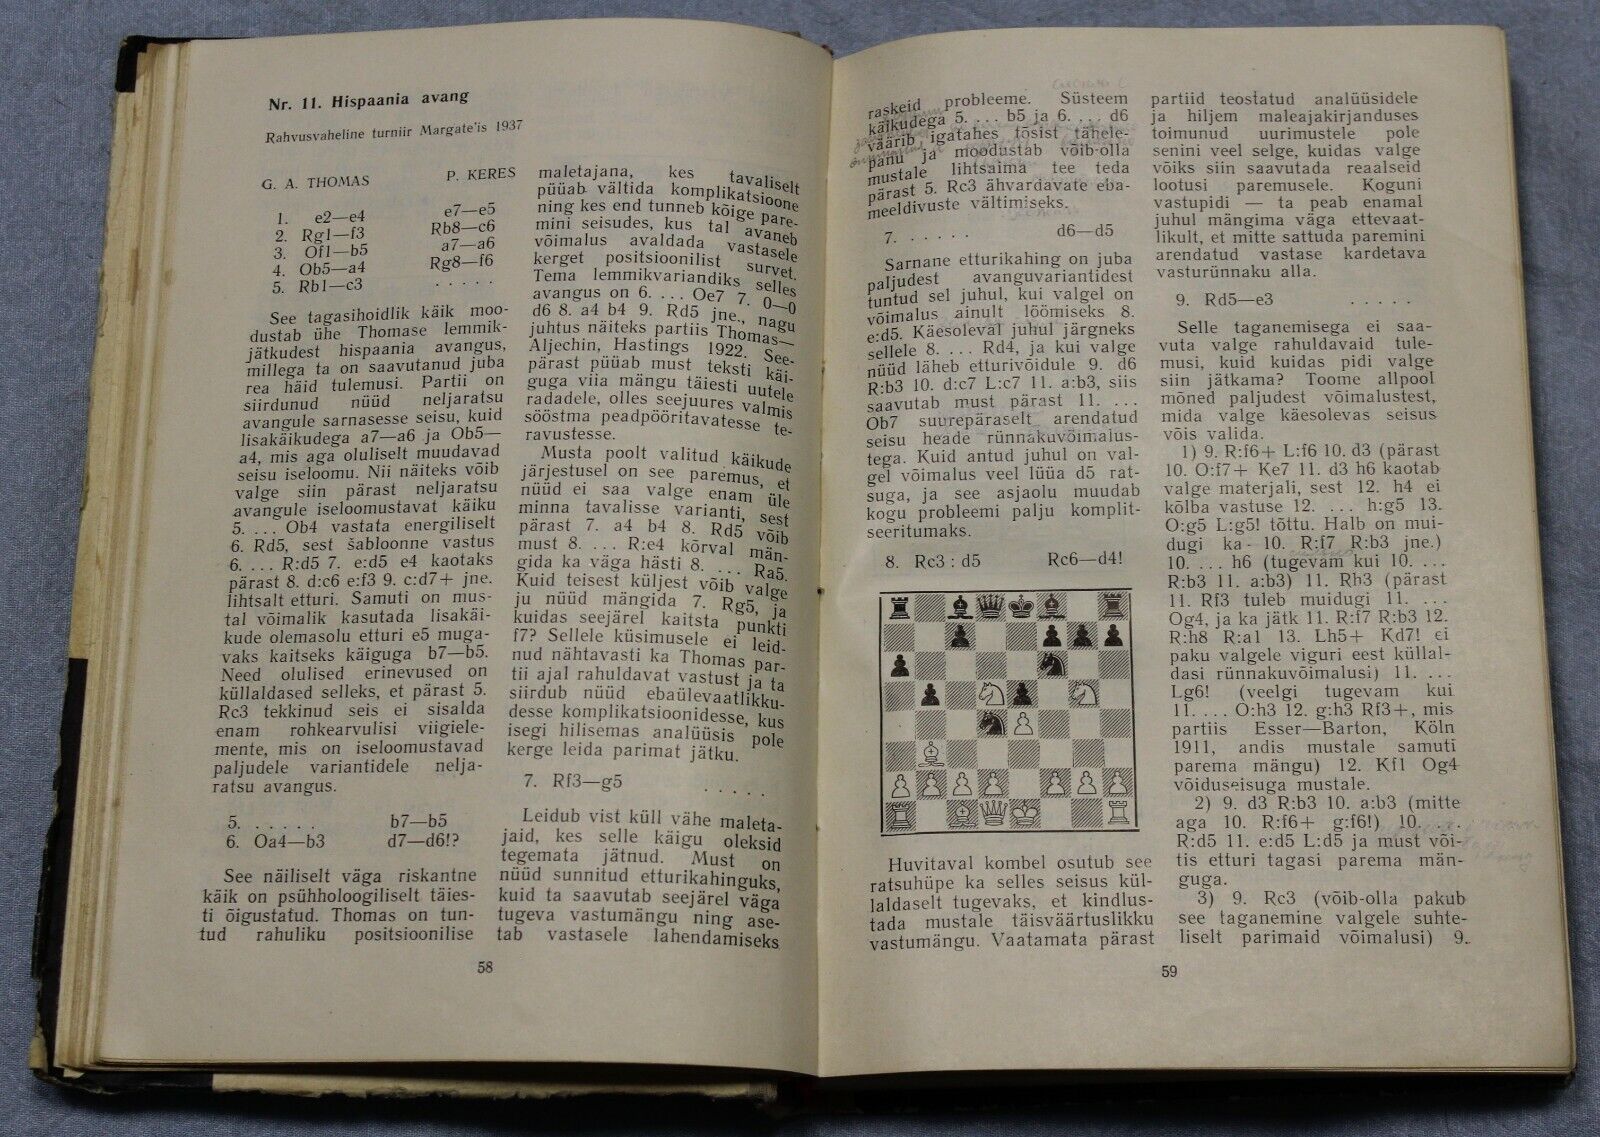 11157.Chess Estonian book: Valitud Partiid 1931 - 1958, Keres, Tallin, 1961